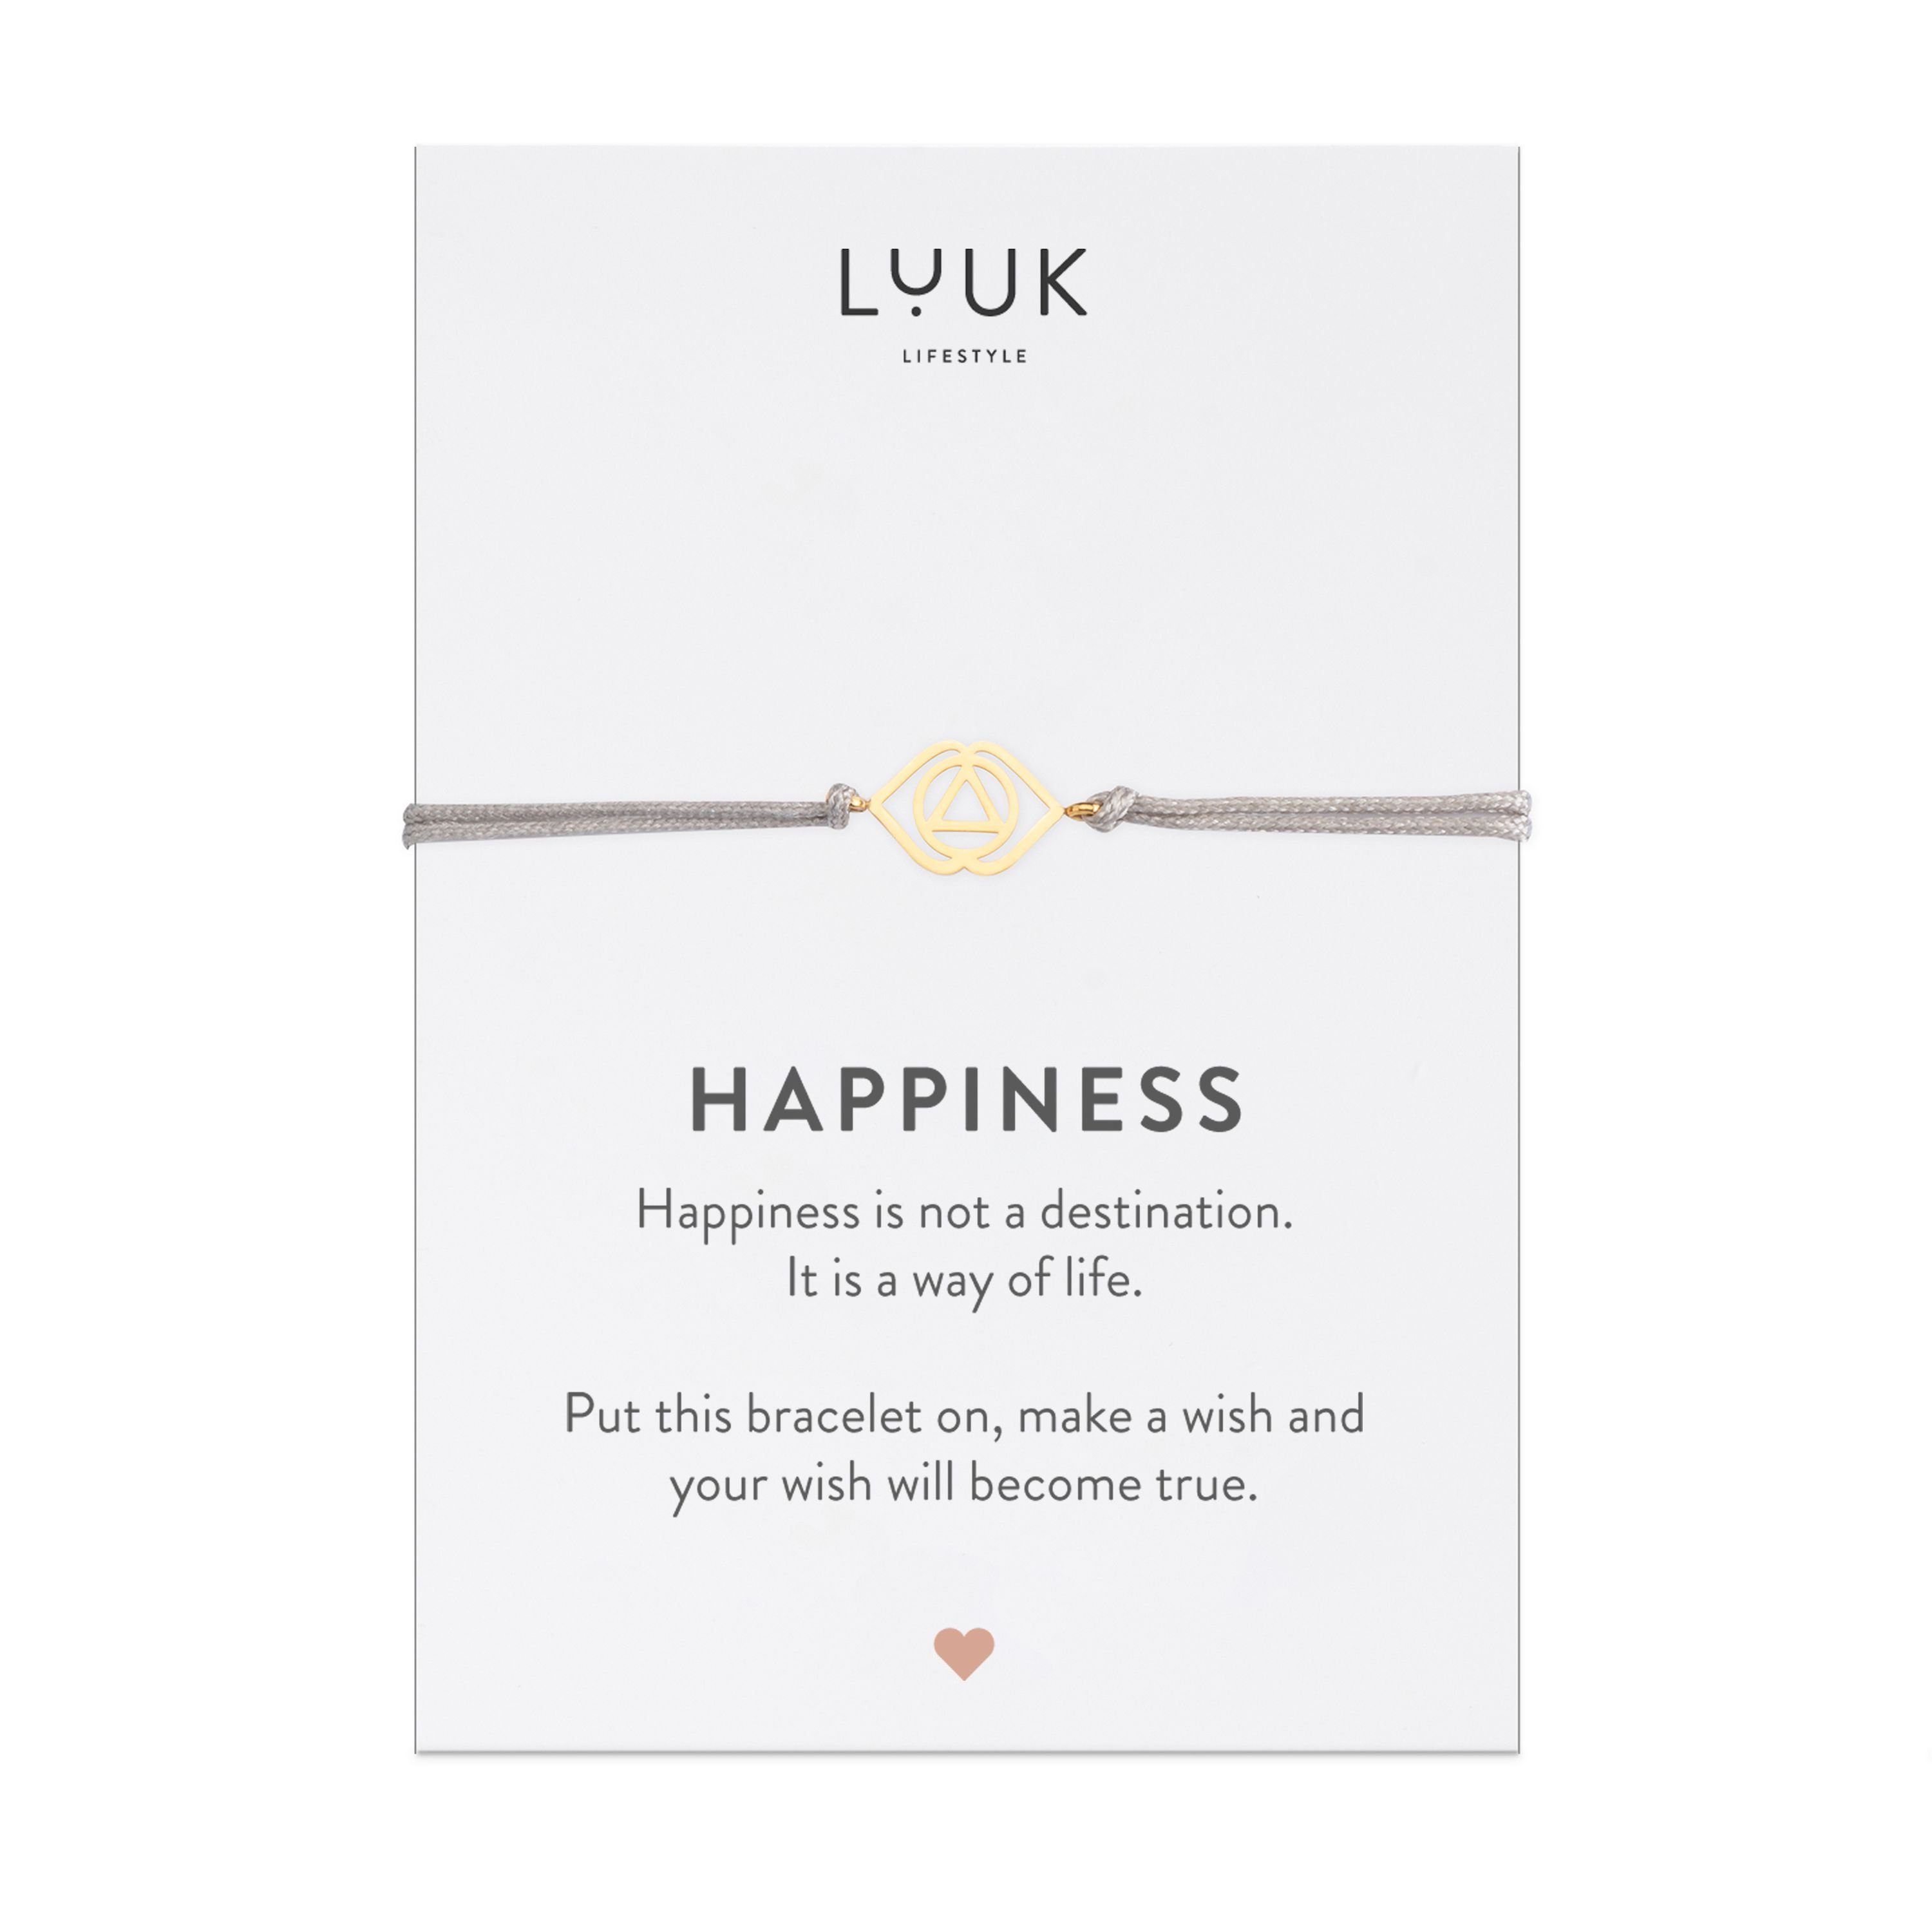 LUUK LIFESTYLE Freundschaftsarmband Happiness Spruchkarte mit handmade, Dreieck